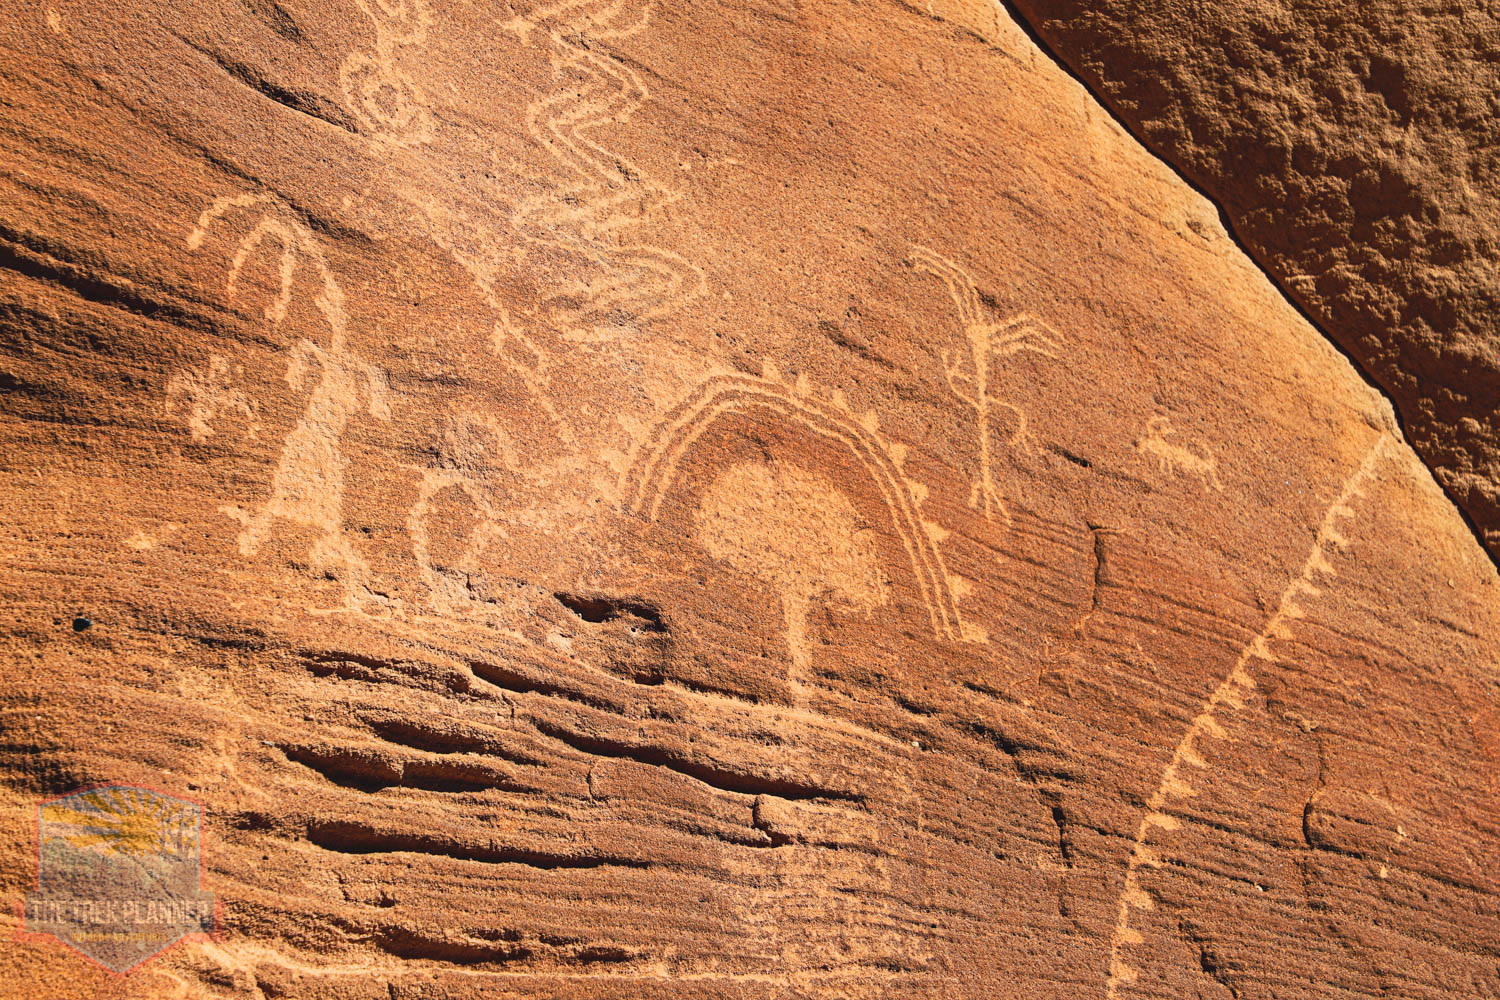 Tree of Life Petroglyph Panel and Mines – San Rafael Swell, Utah